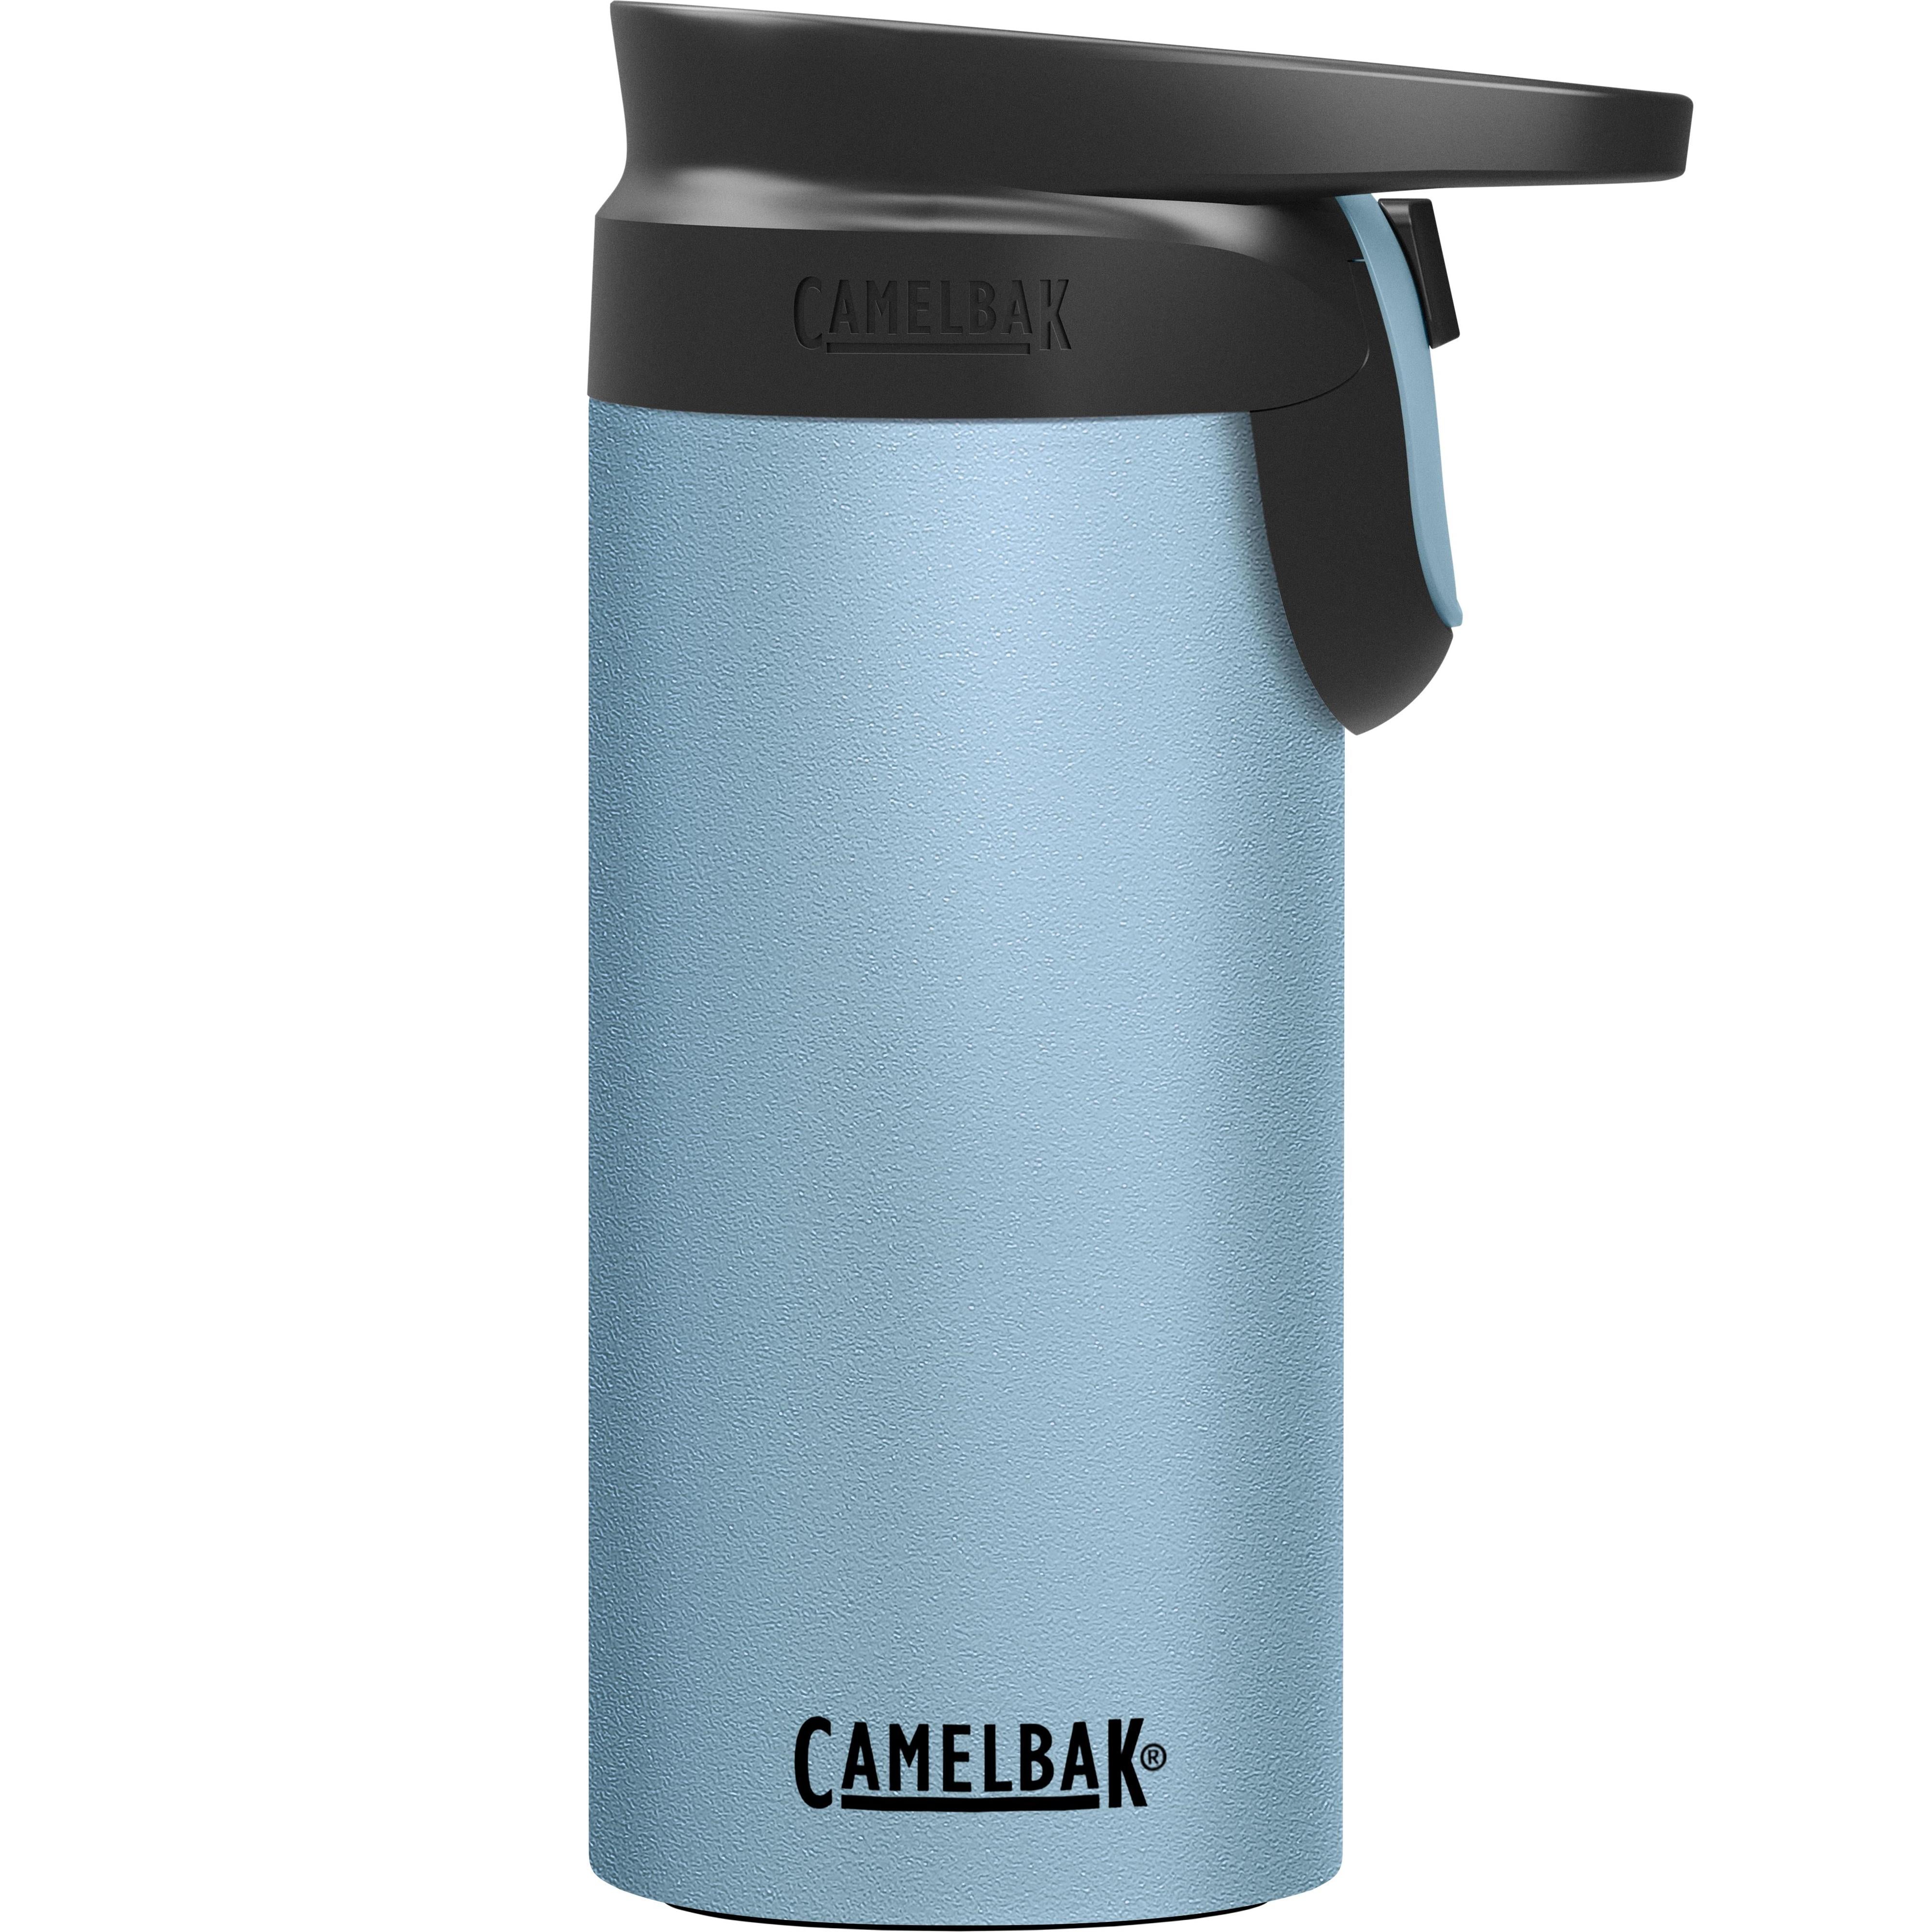 CAMELBAK Forge Travel Mug (12 fl oz, Steel Blue) 57006 B&H Photo